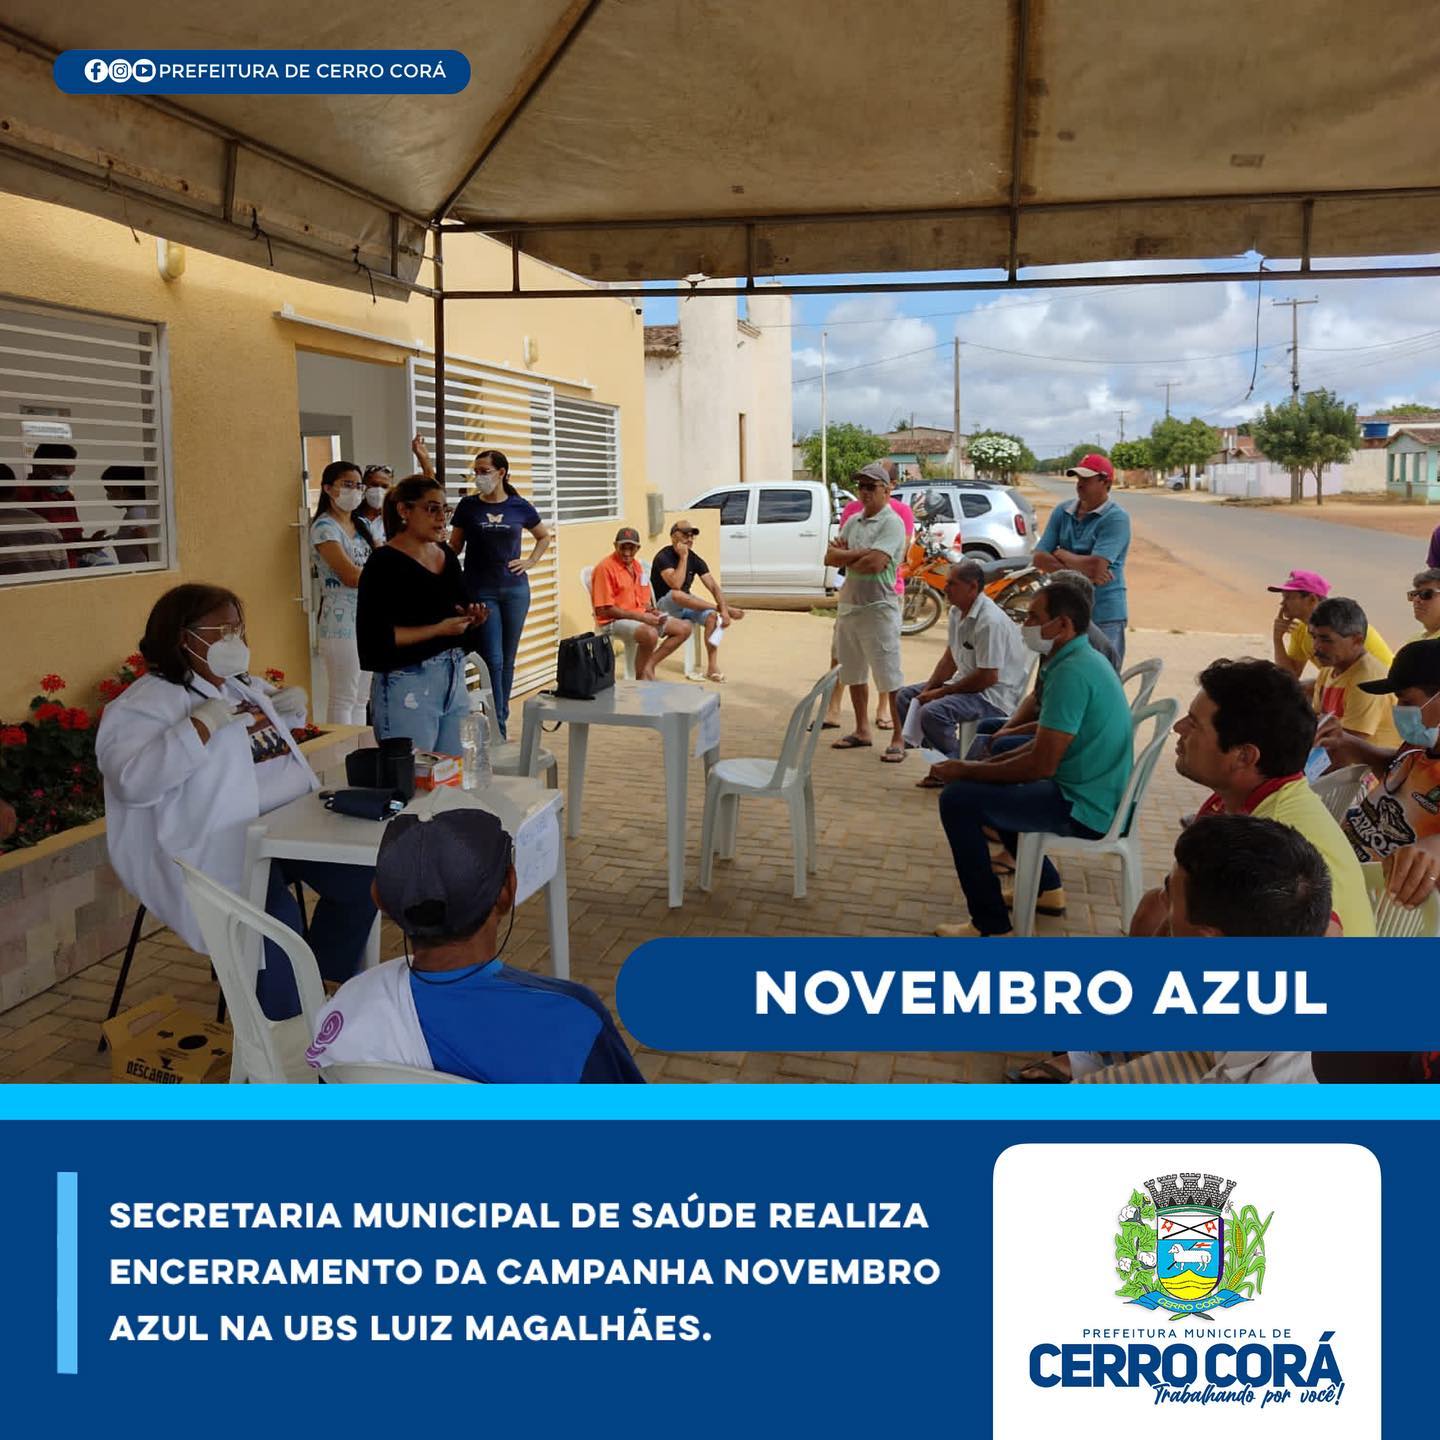 Cerro Corá: Prefeitura realiza encerramento da campanha novembro azul